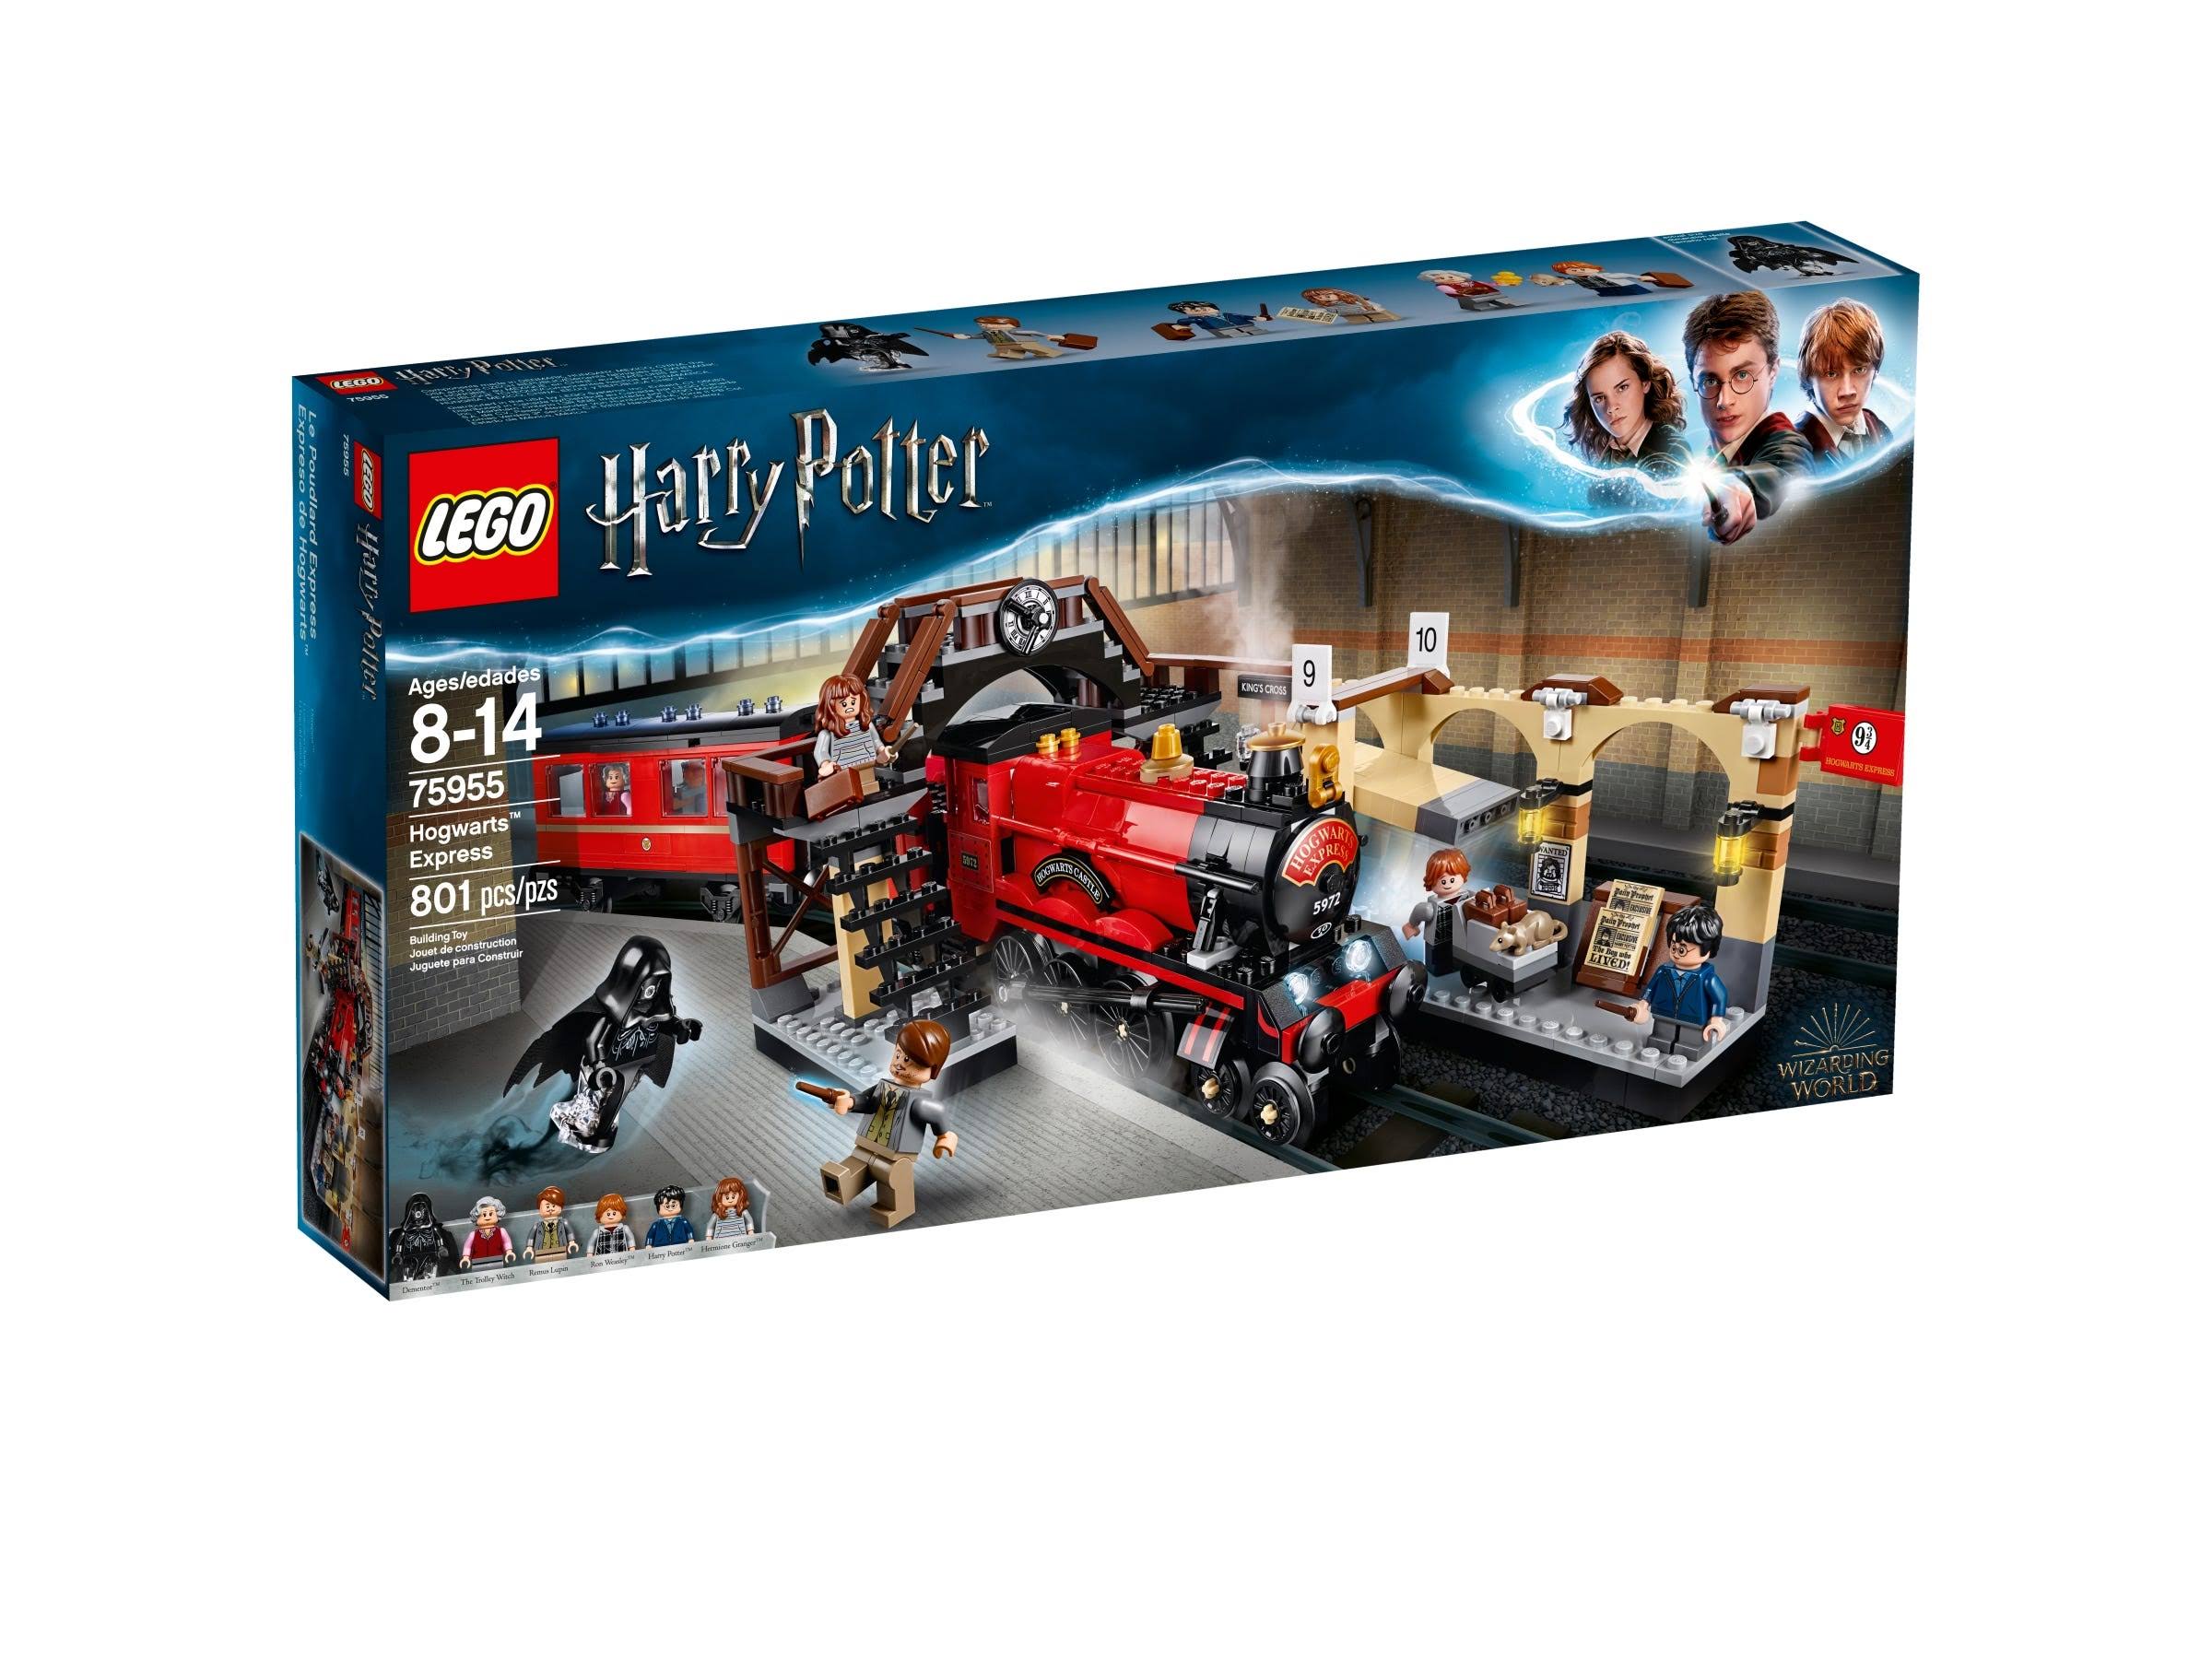 Lego Harry Potter Building Set - Hogwarts Express, 801pc